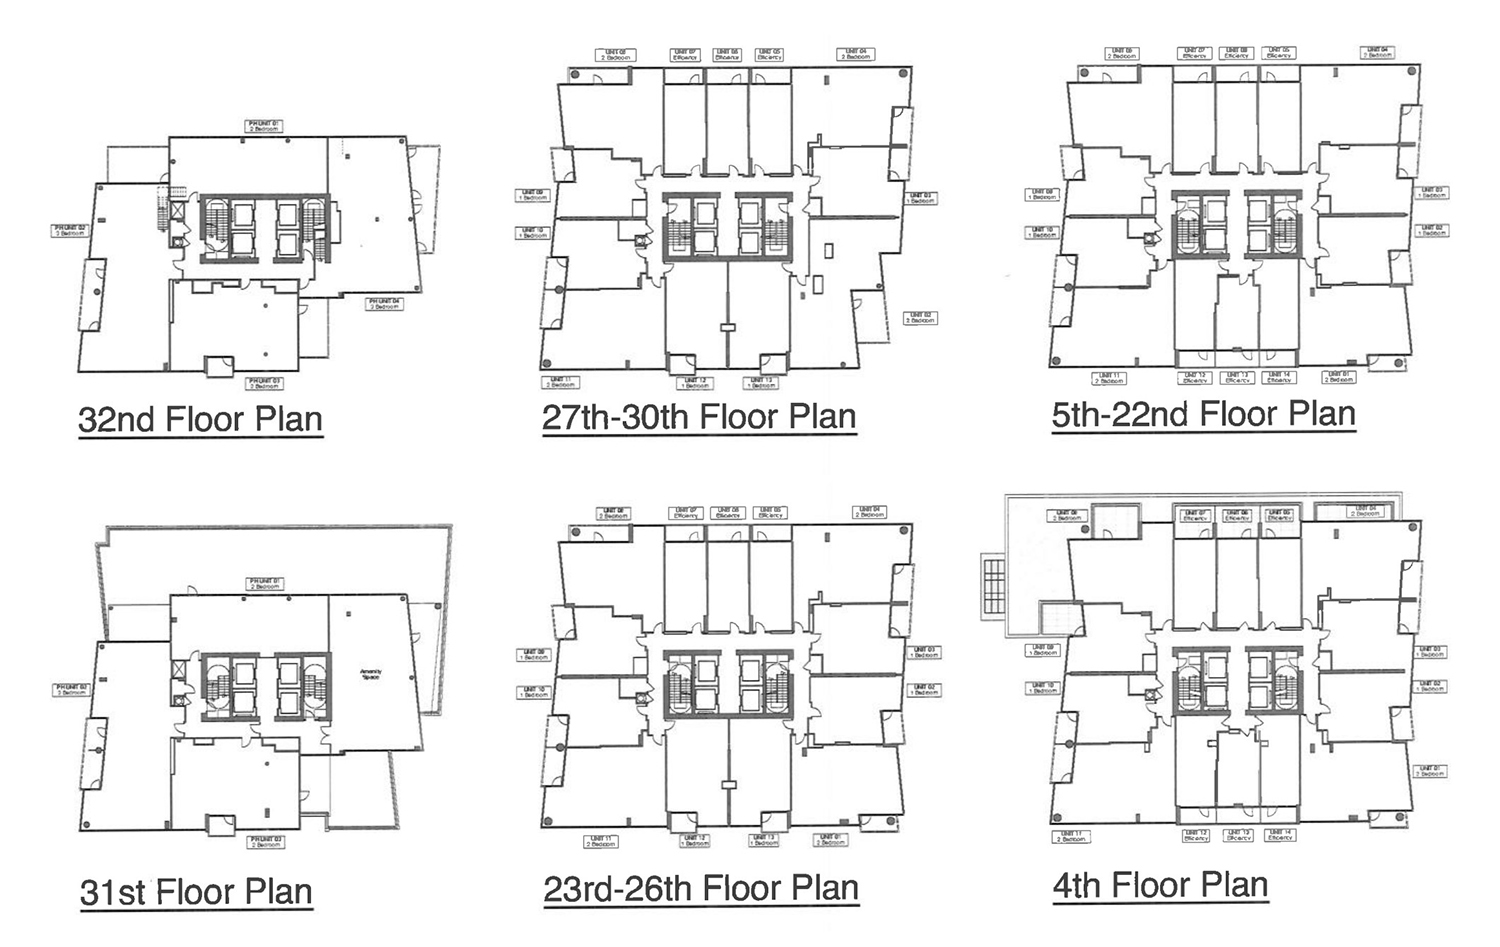 354 N Union Avenue floor layouts